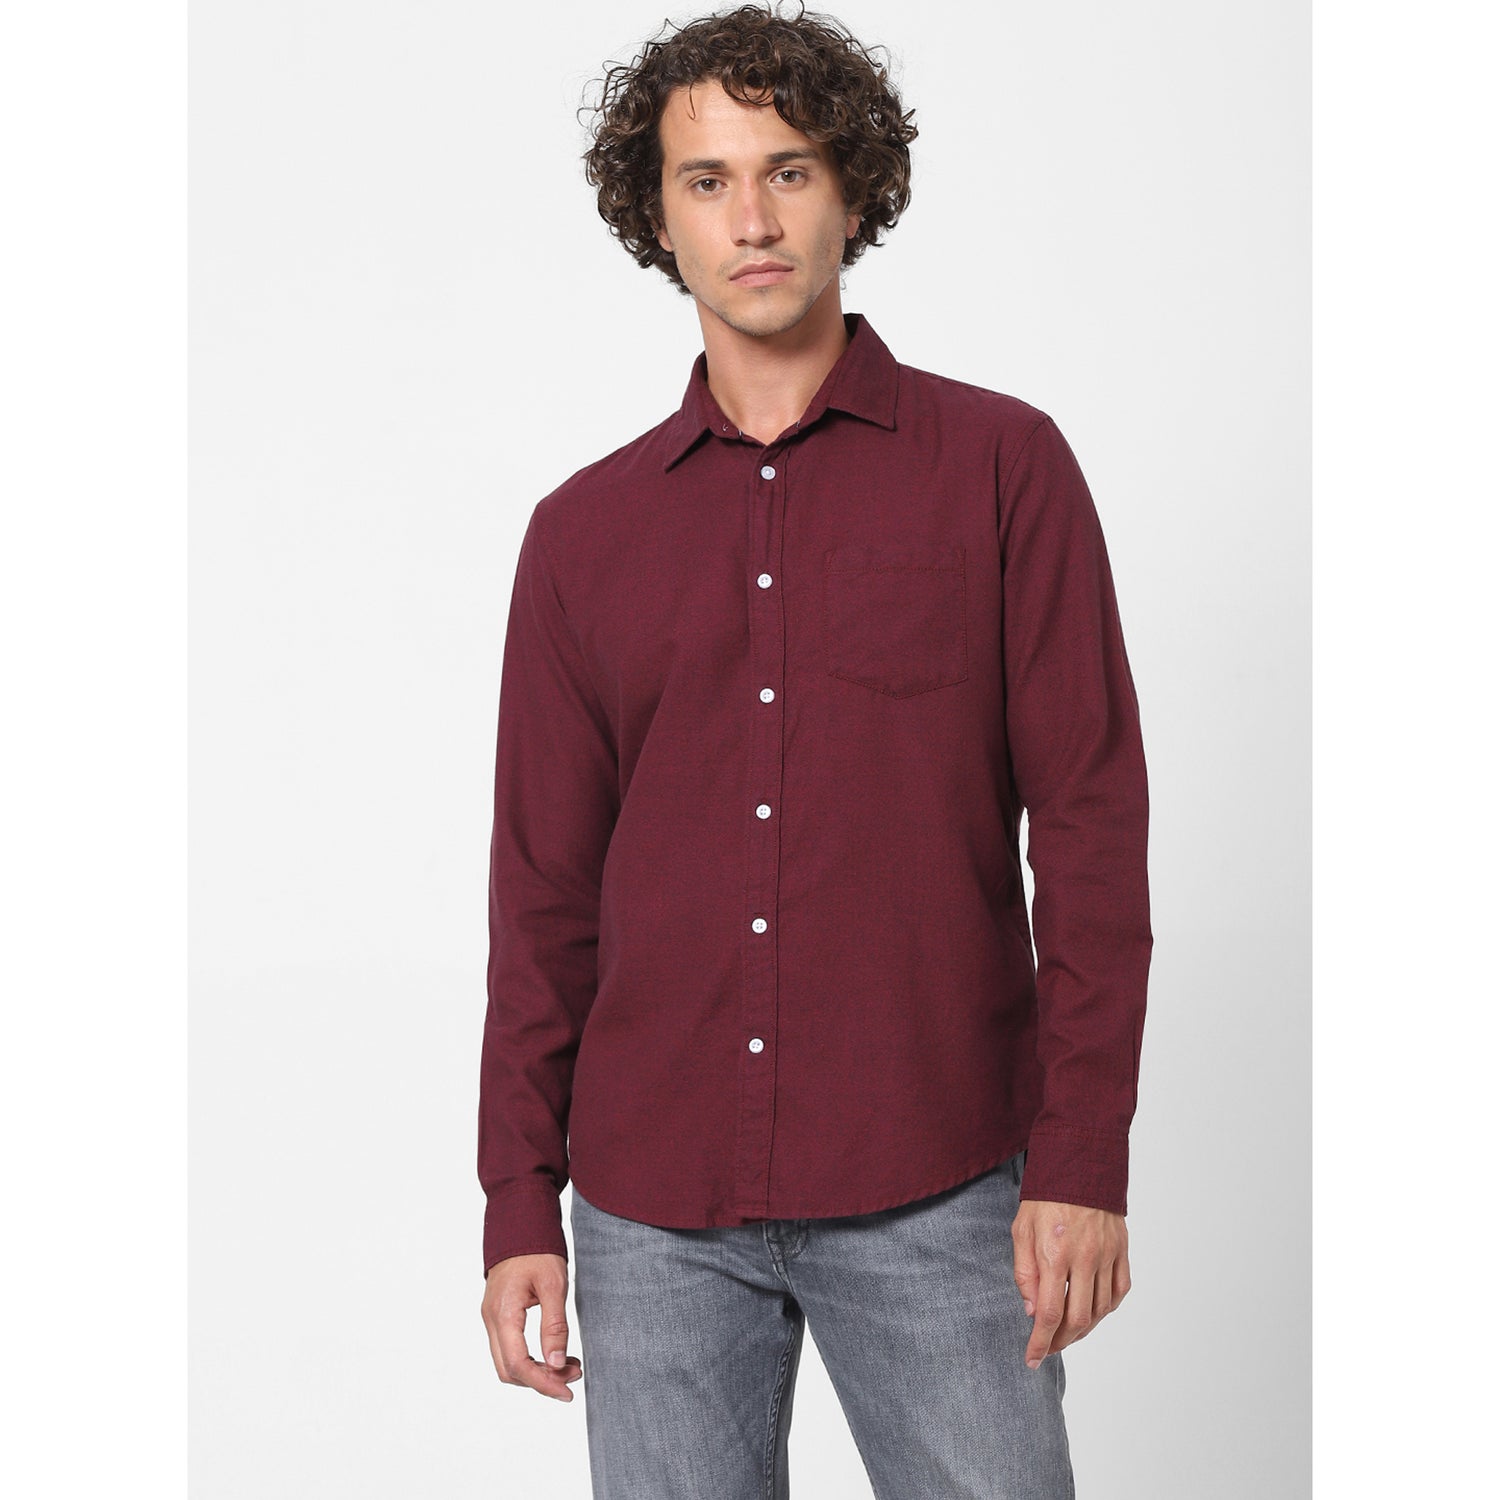 Burgundy Solid Cotton Regular Fit Casual Shirt (VAGRIND)